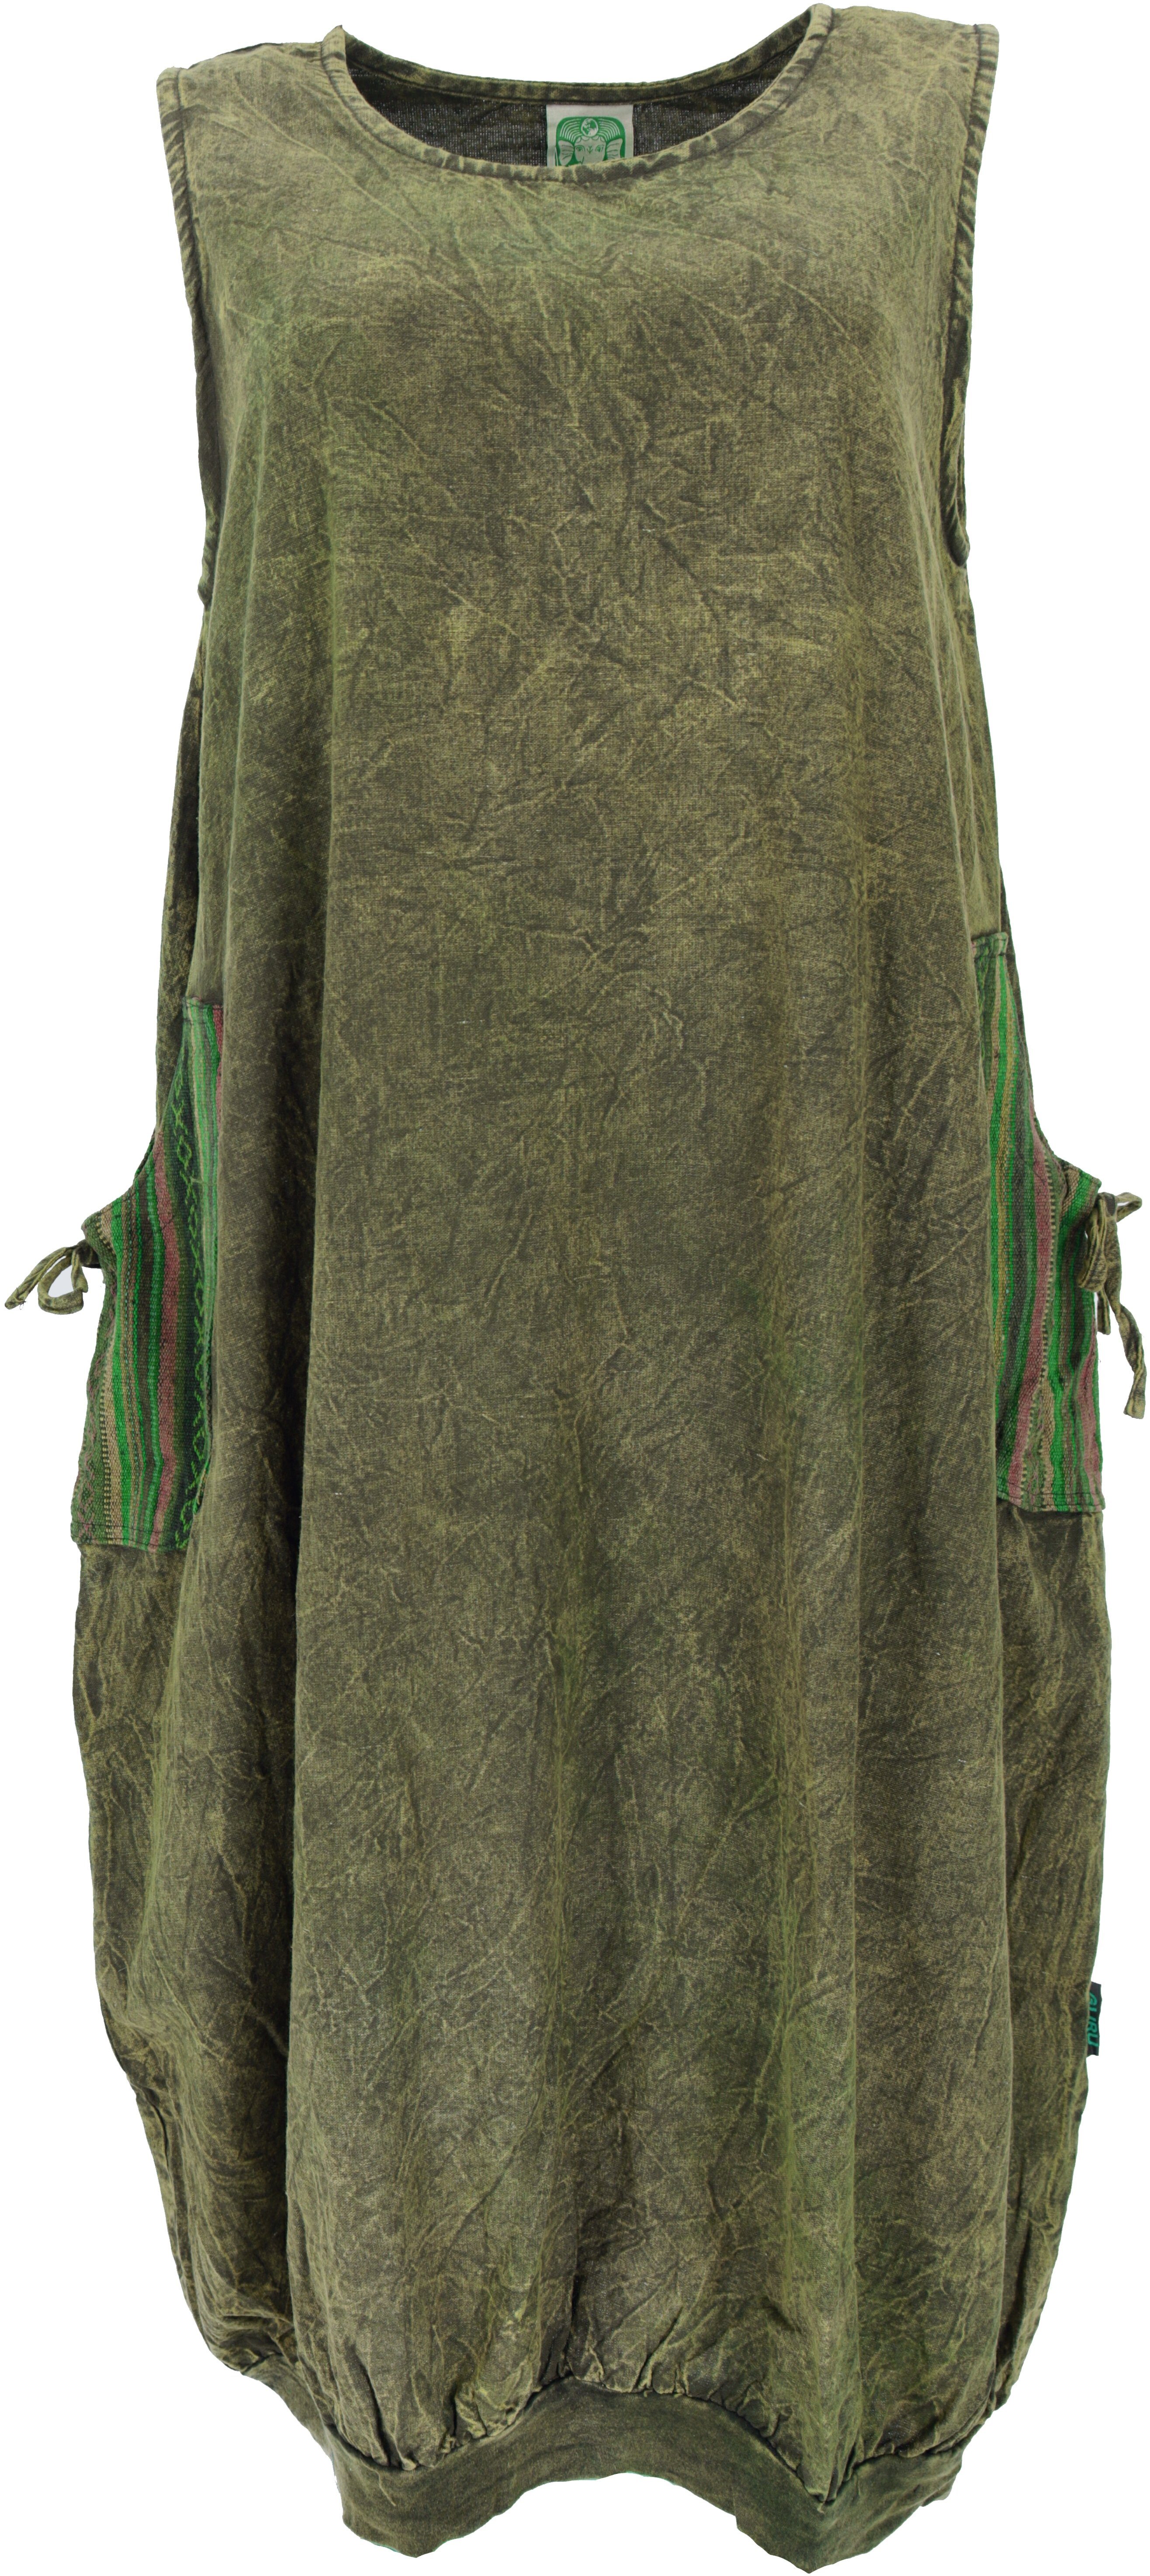 Guru-Shop Midikleid Boho Sommerkleid, Maxikleid aus Baumwolle - grün alternative Bekleidung